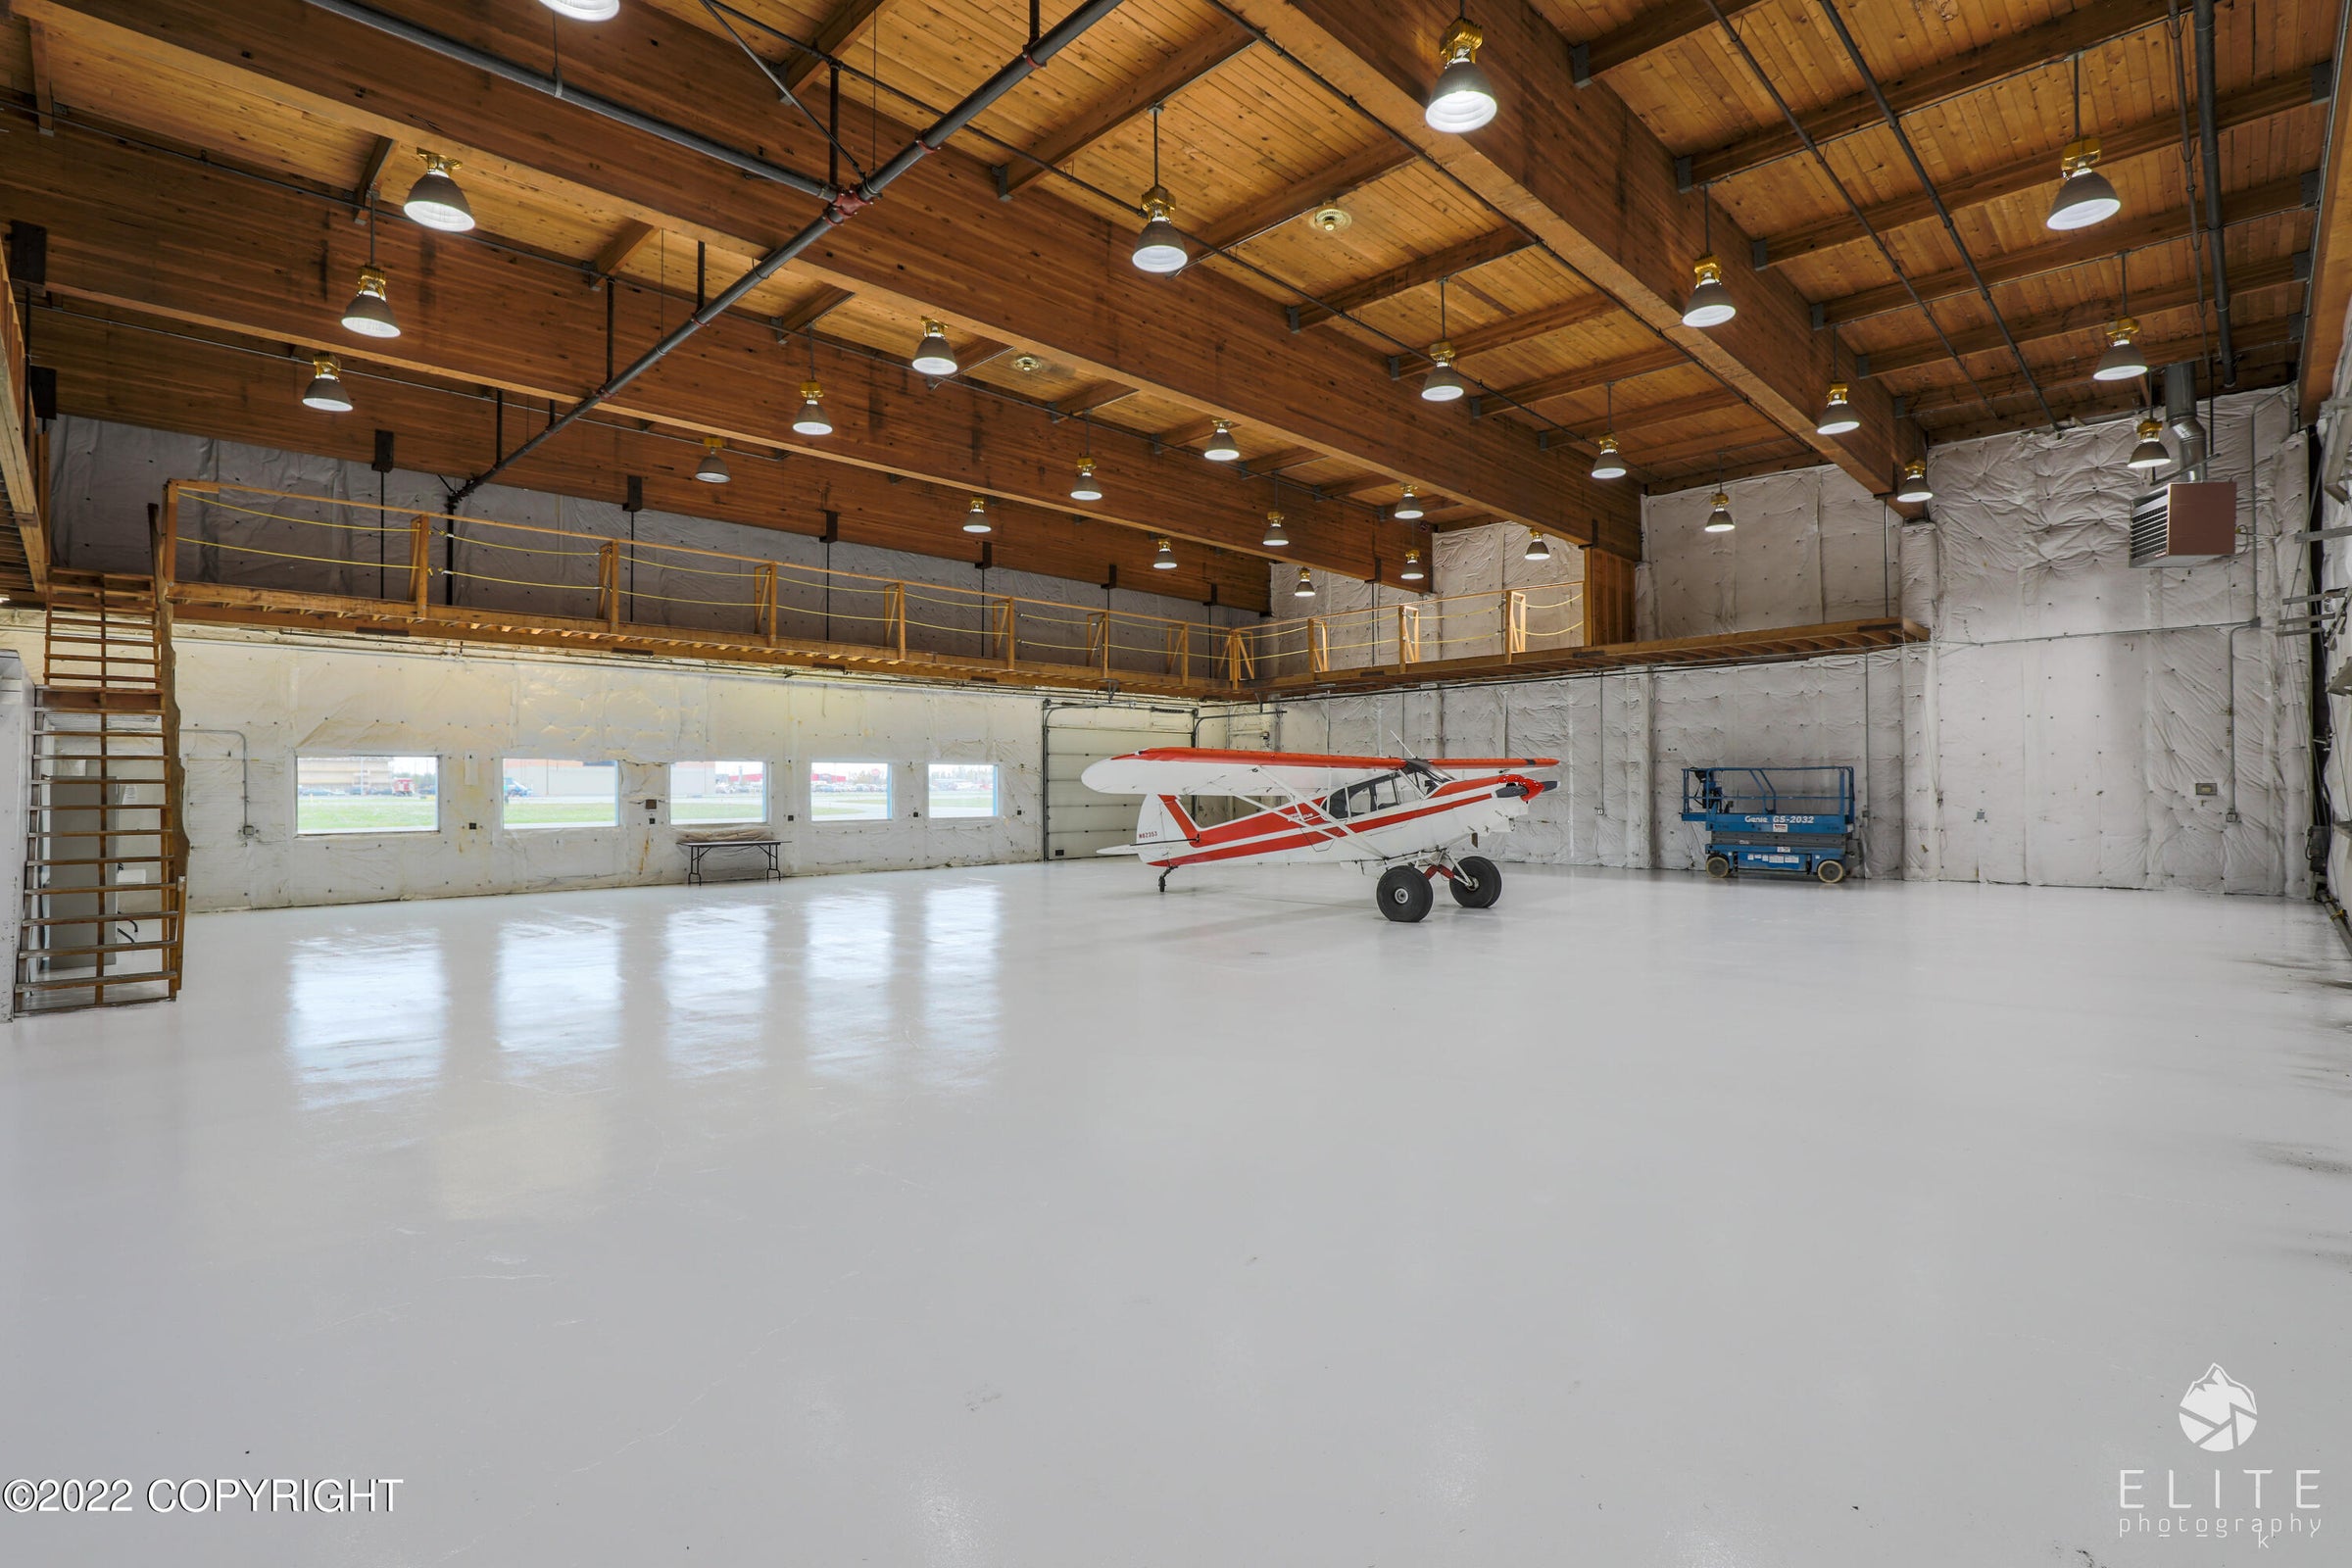 Hangar in a